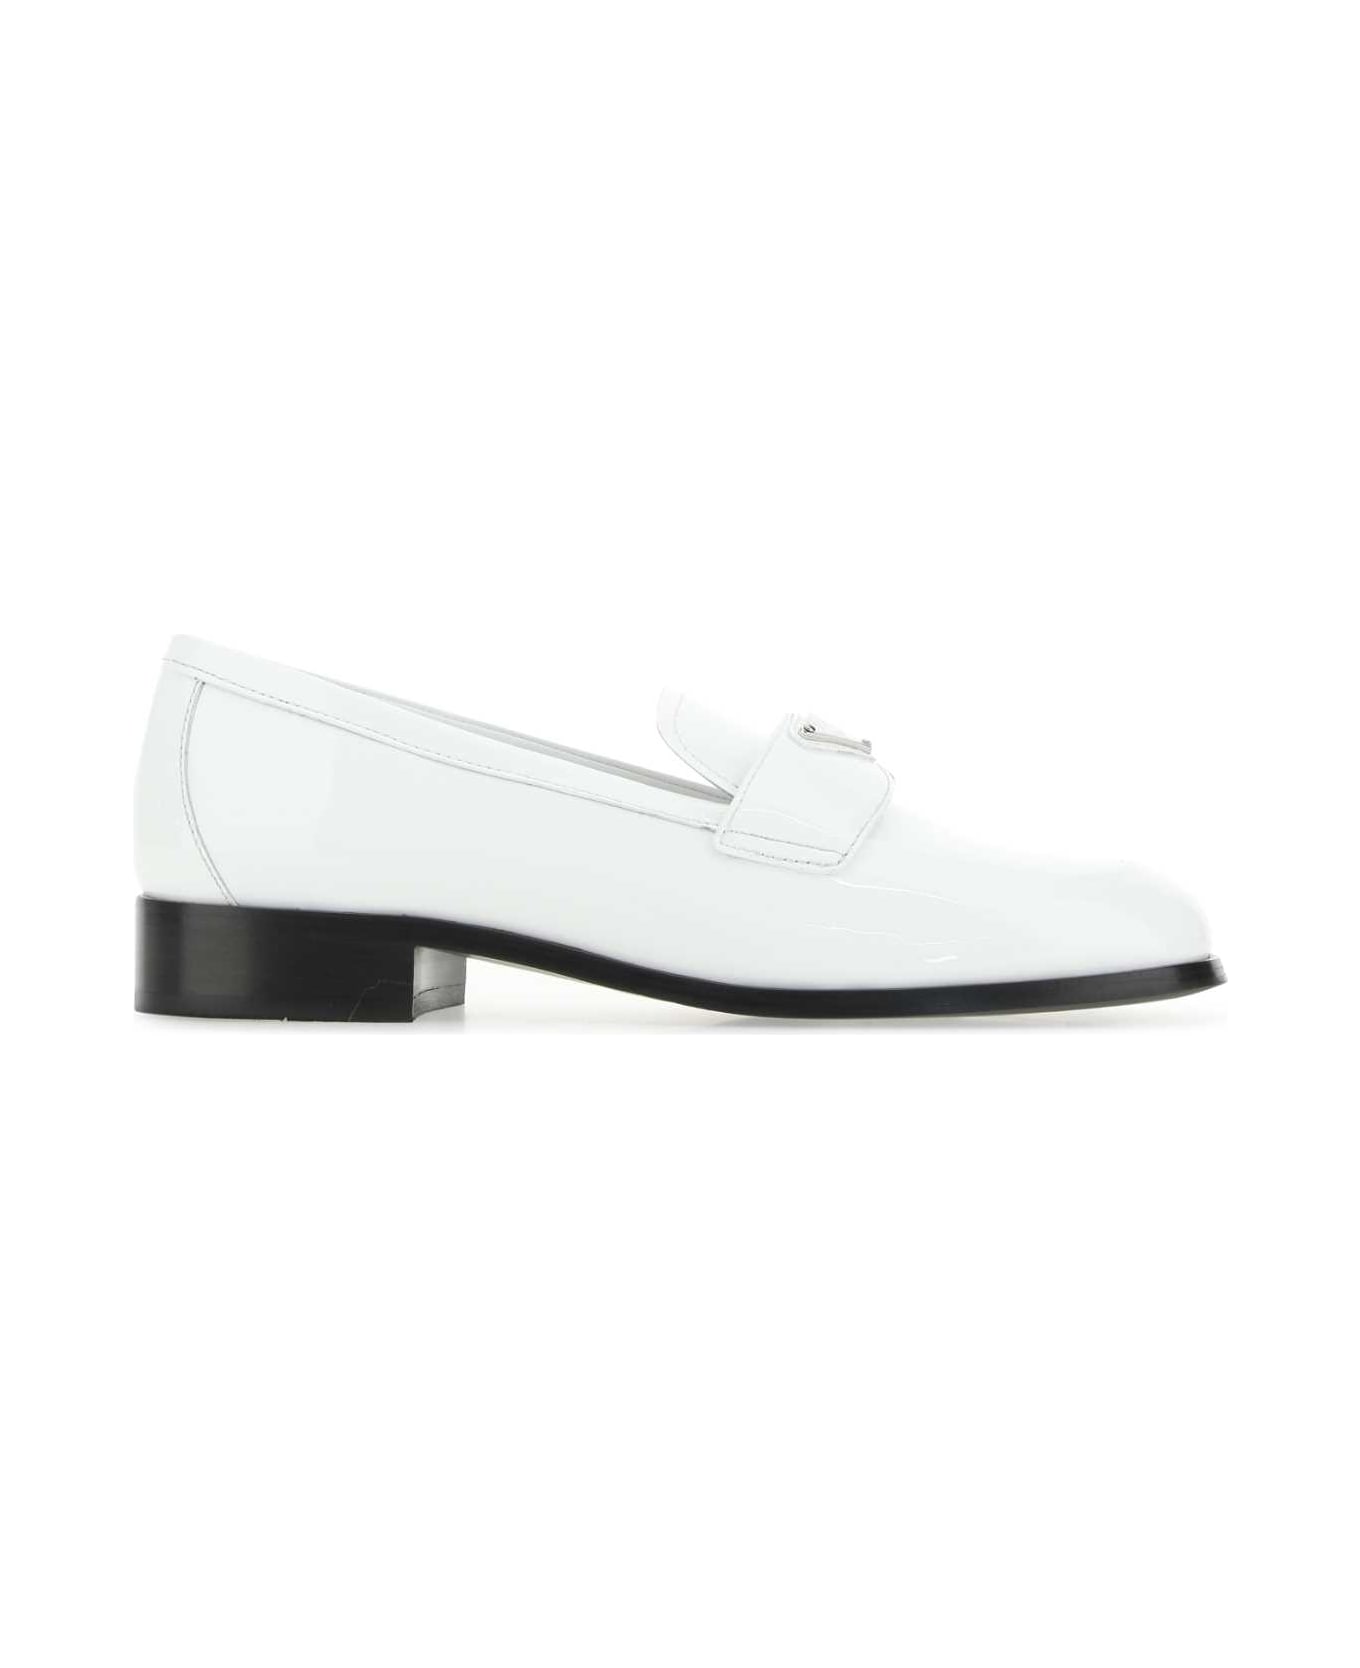 Prada White Leather Loafers - F0009 フラットシューズ